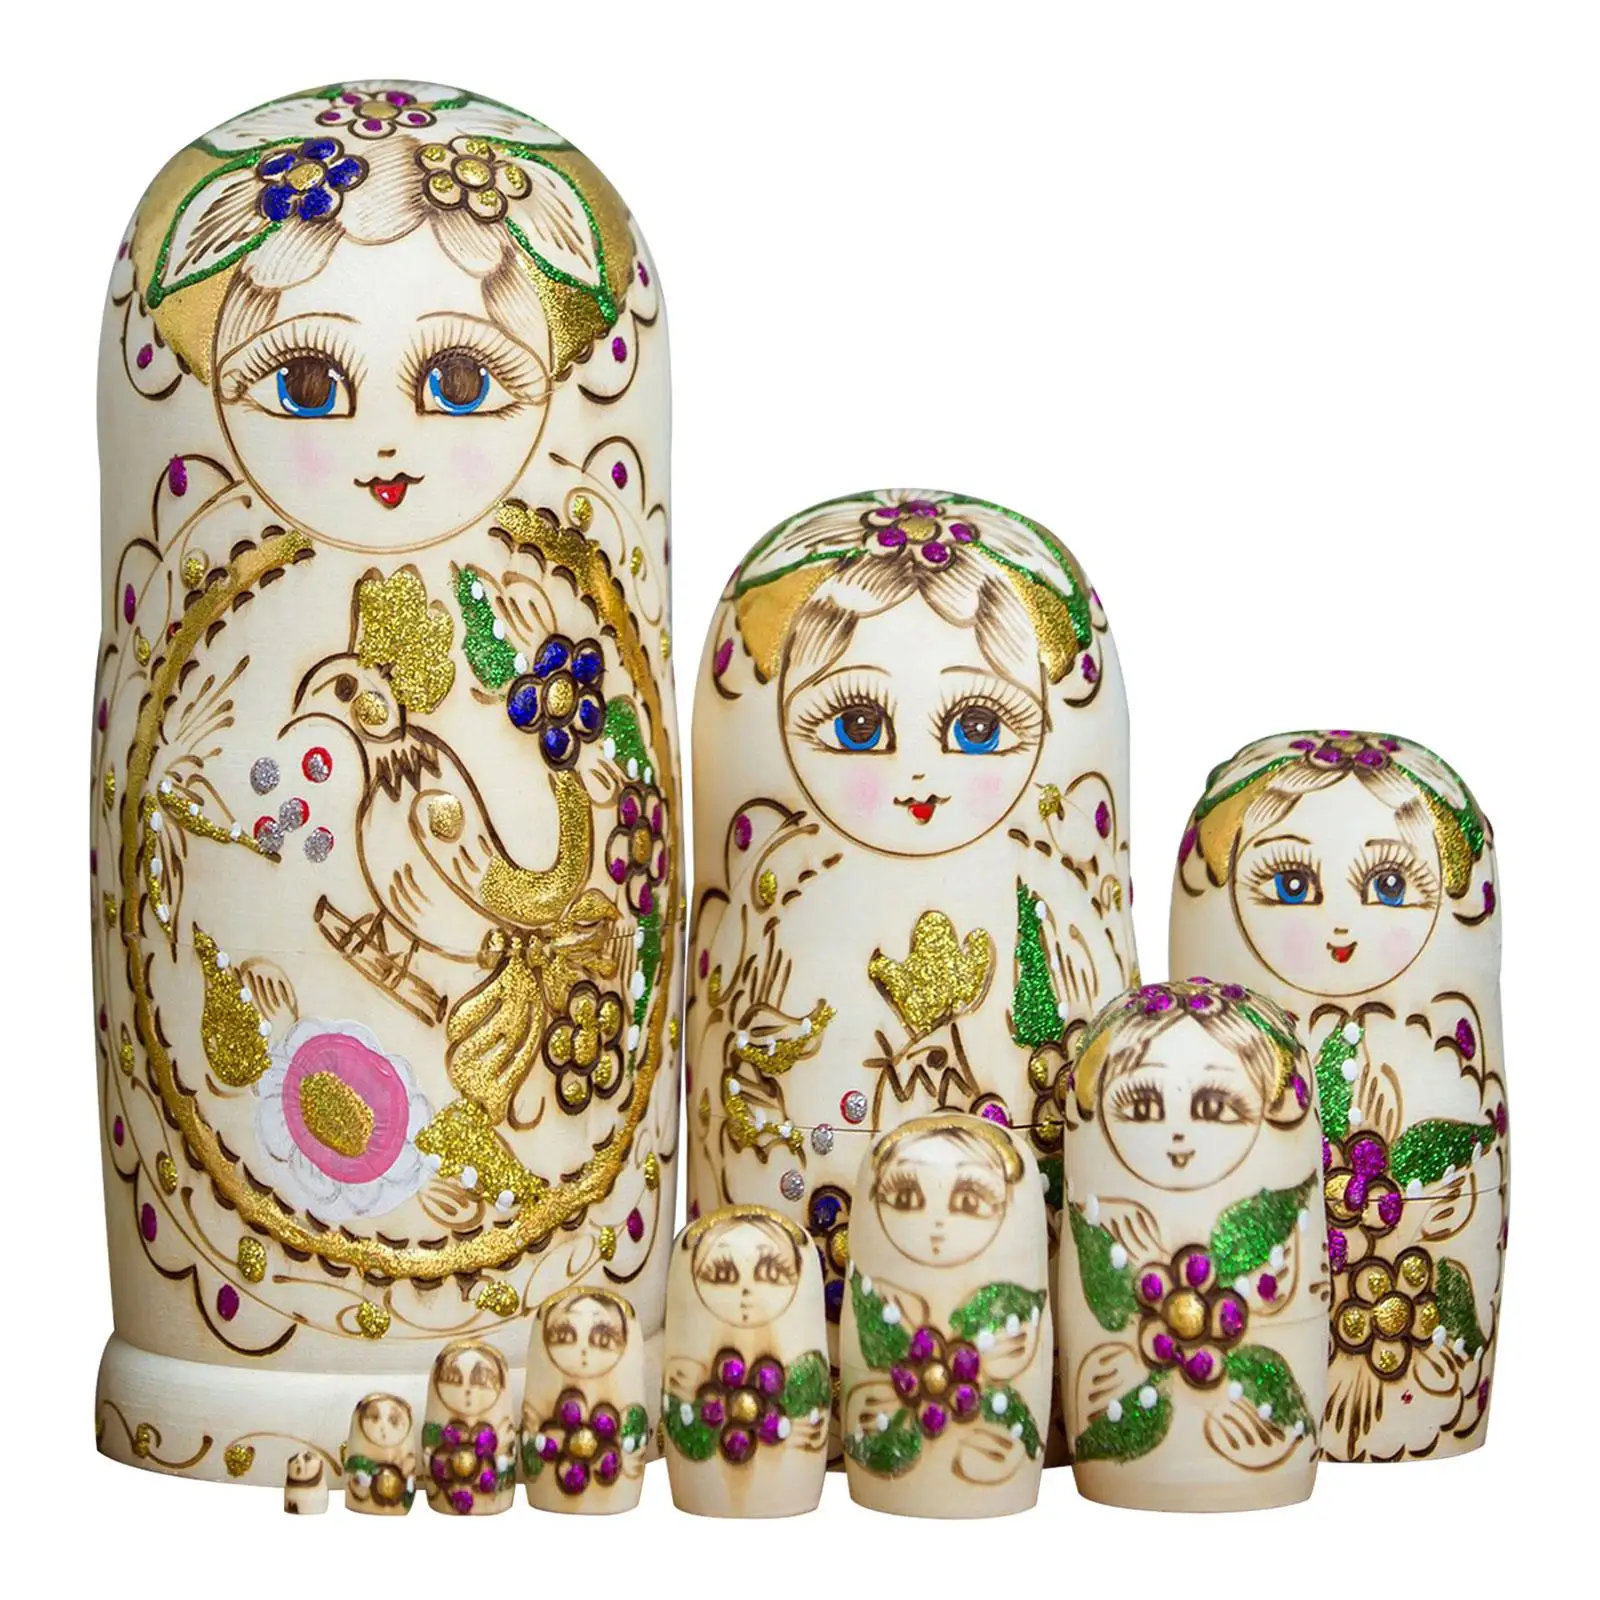 10Pcs Russian Nesting Dolls Matryoshka Doll Hand Painted Figures, Handmade Wood Stacking Doll Set for Children Gift Halloween